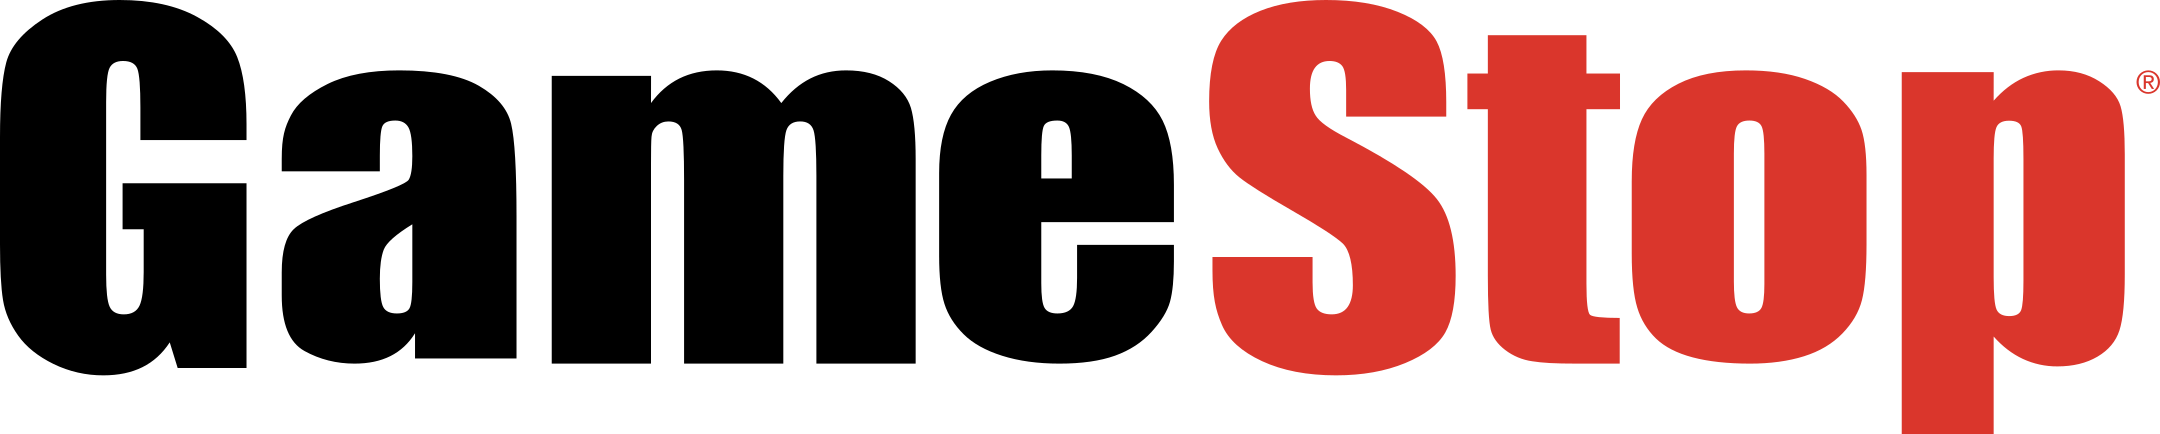 gamestop logo 1 - GamesStop Logo